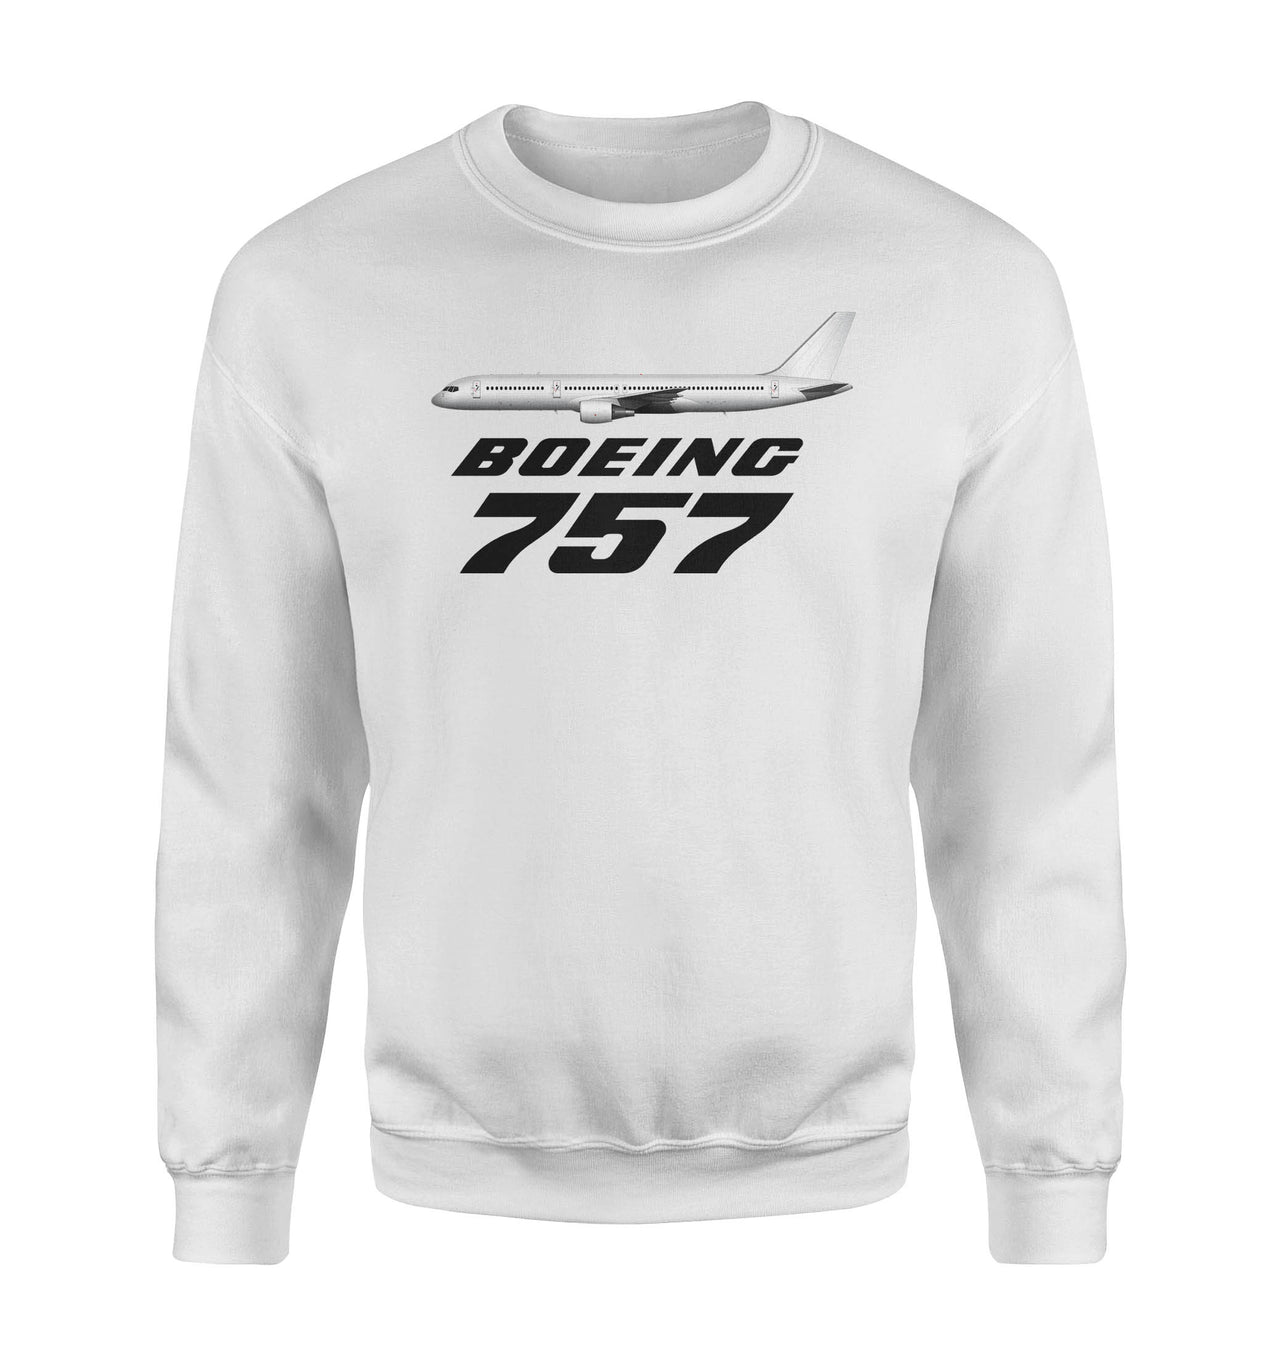 The Boeing 757 Designed Sweatshirts